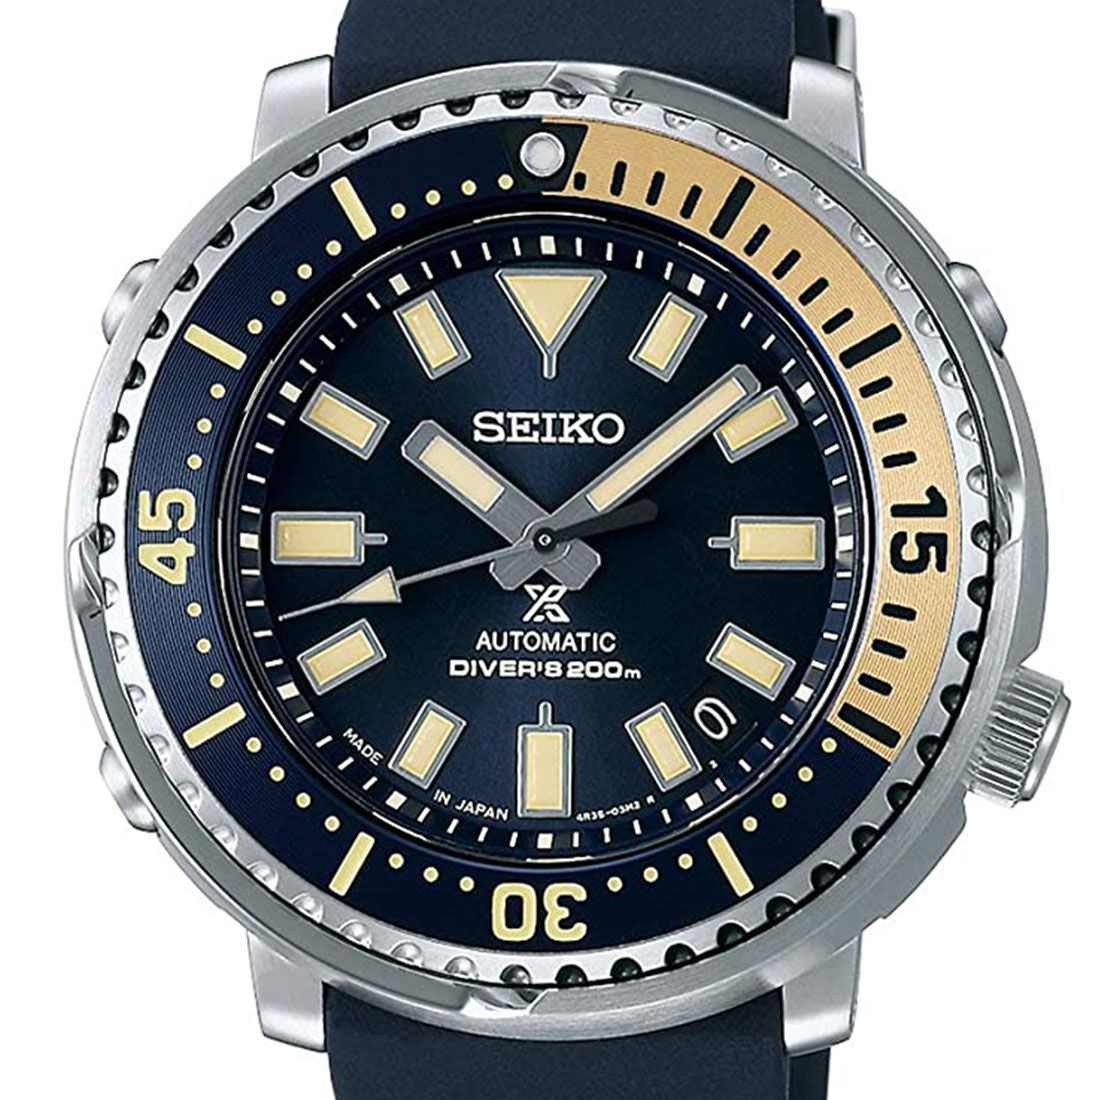 Seiko Prospex Street Safari Divers Blue Dial JDM Japan Watch SBDY073 -Seiko